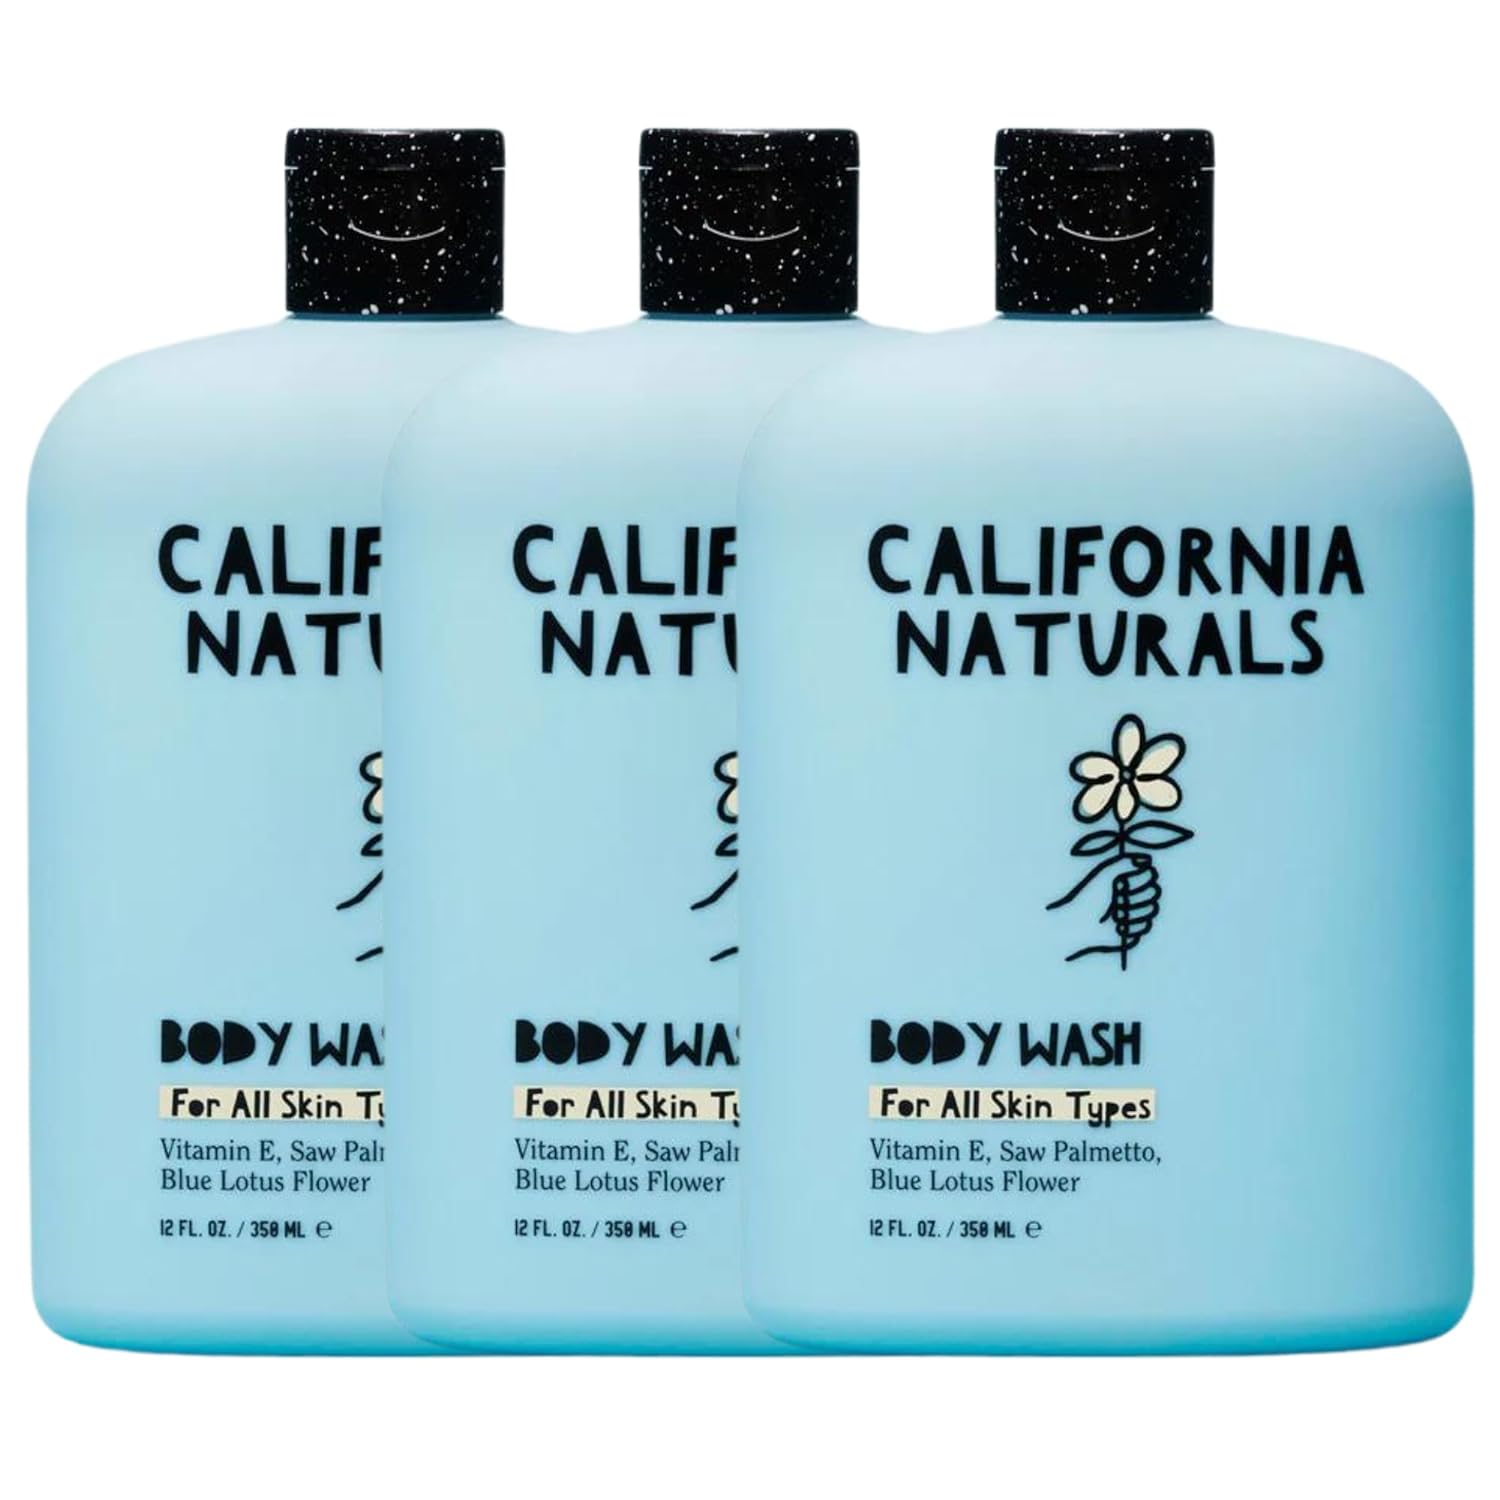 California Naturals Body Wash, Vitamin E Shower Gel Cleanser, Saw Palmetto, Blue Lotus Flower, Natural, Vegan, Paraben & Sulfate Free, Eucalyptus, Orange Blossom, All Skin Types, 12 fl oz, 3 Pack